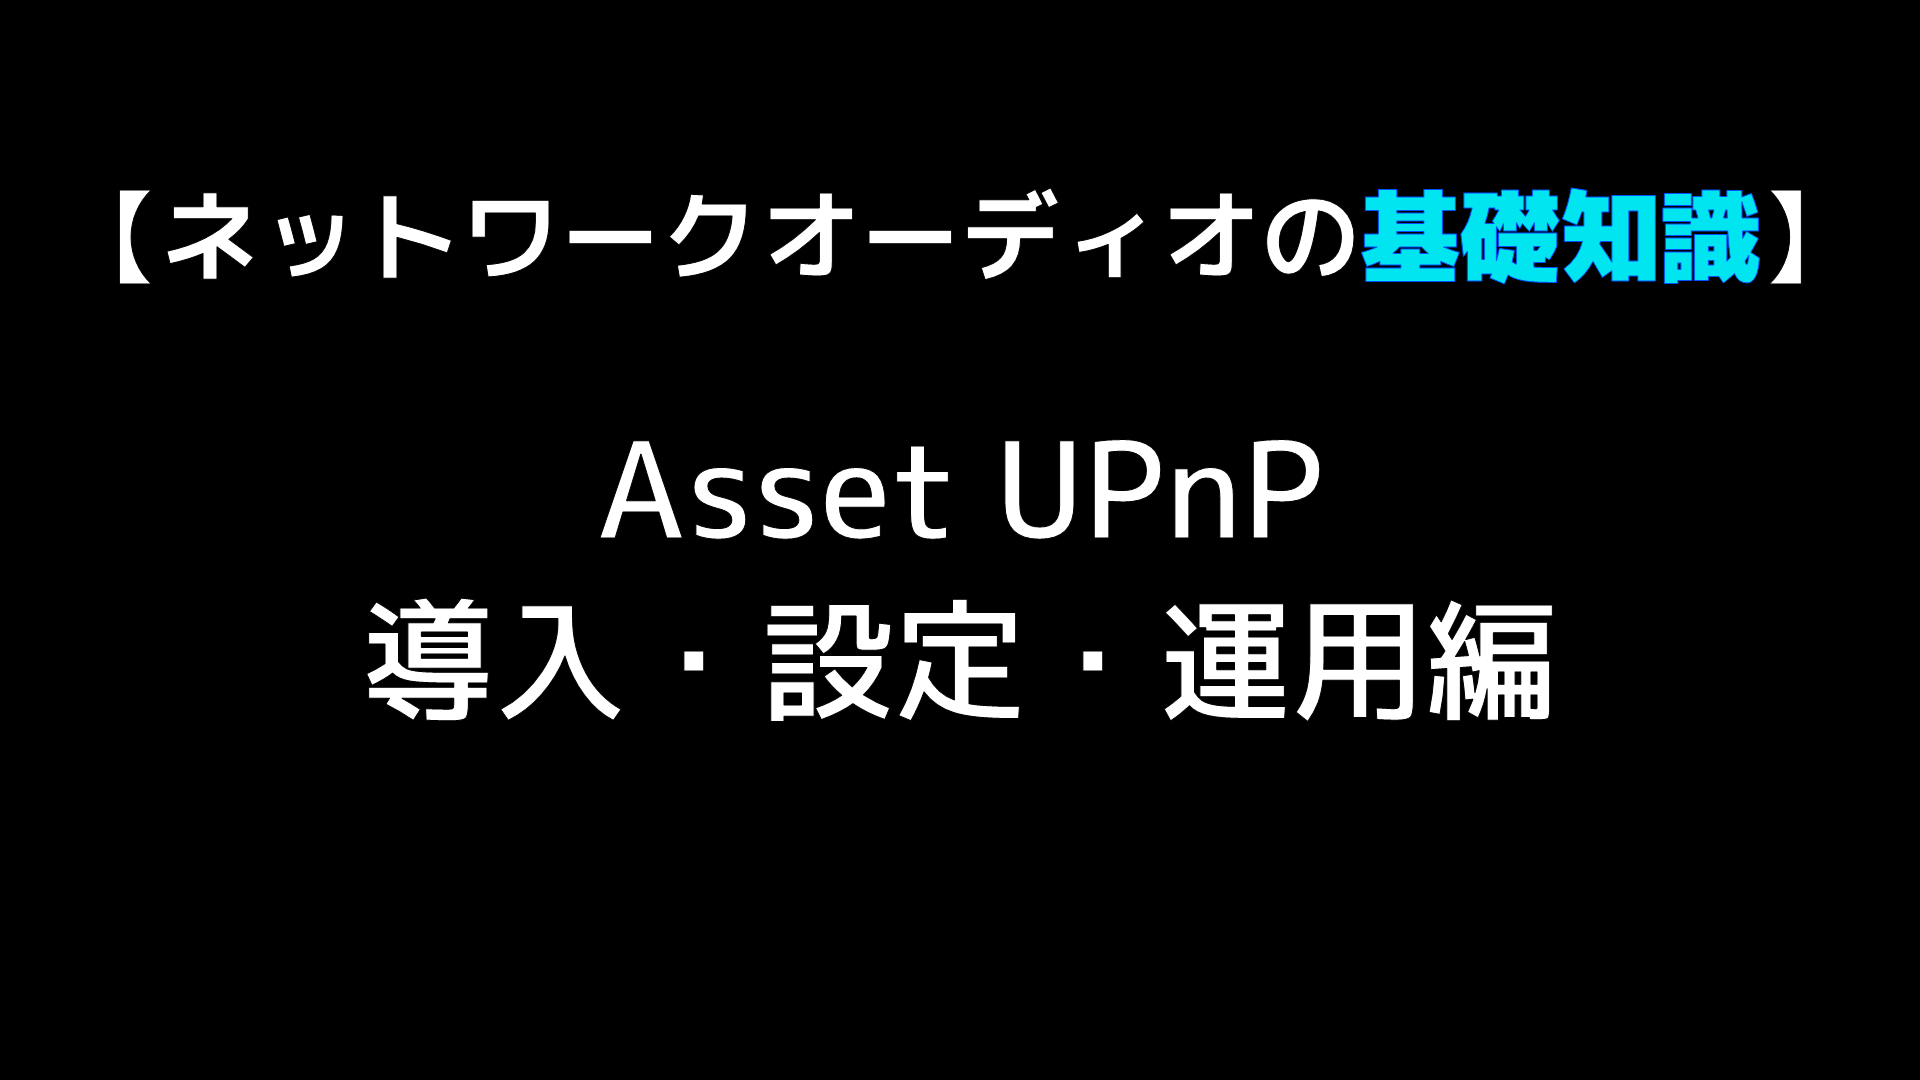 remove asset upnp illustrate